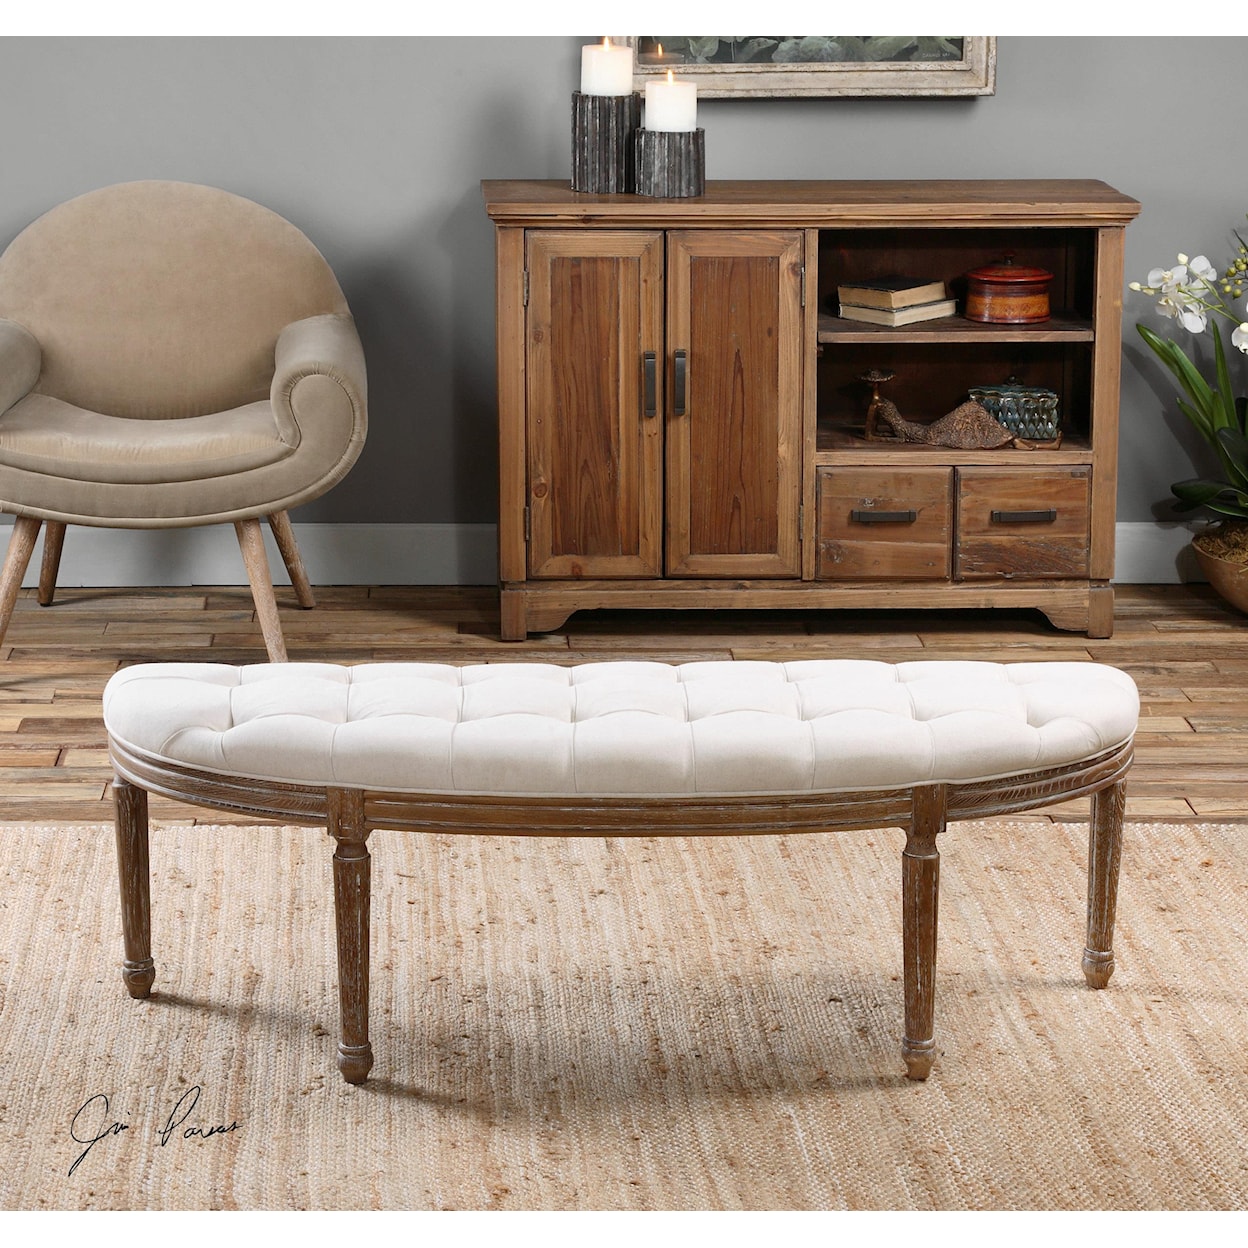 Uttermost Accent Furniture - Benches Leggett Tufted White Bench